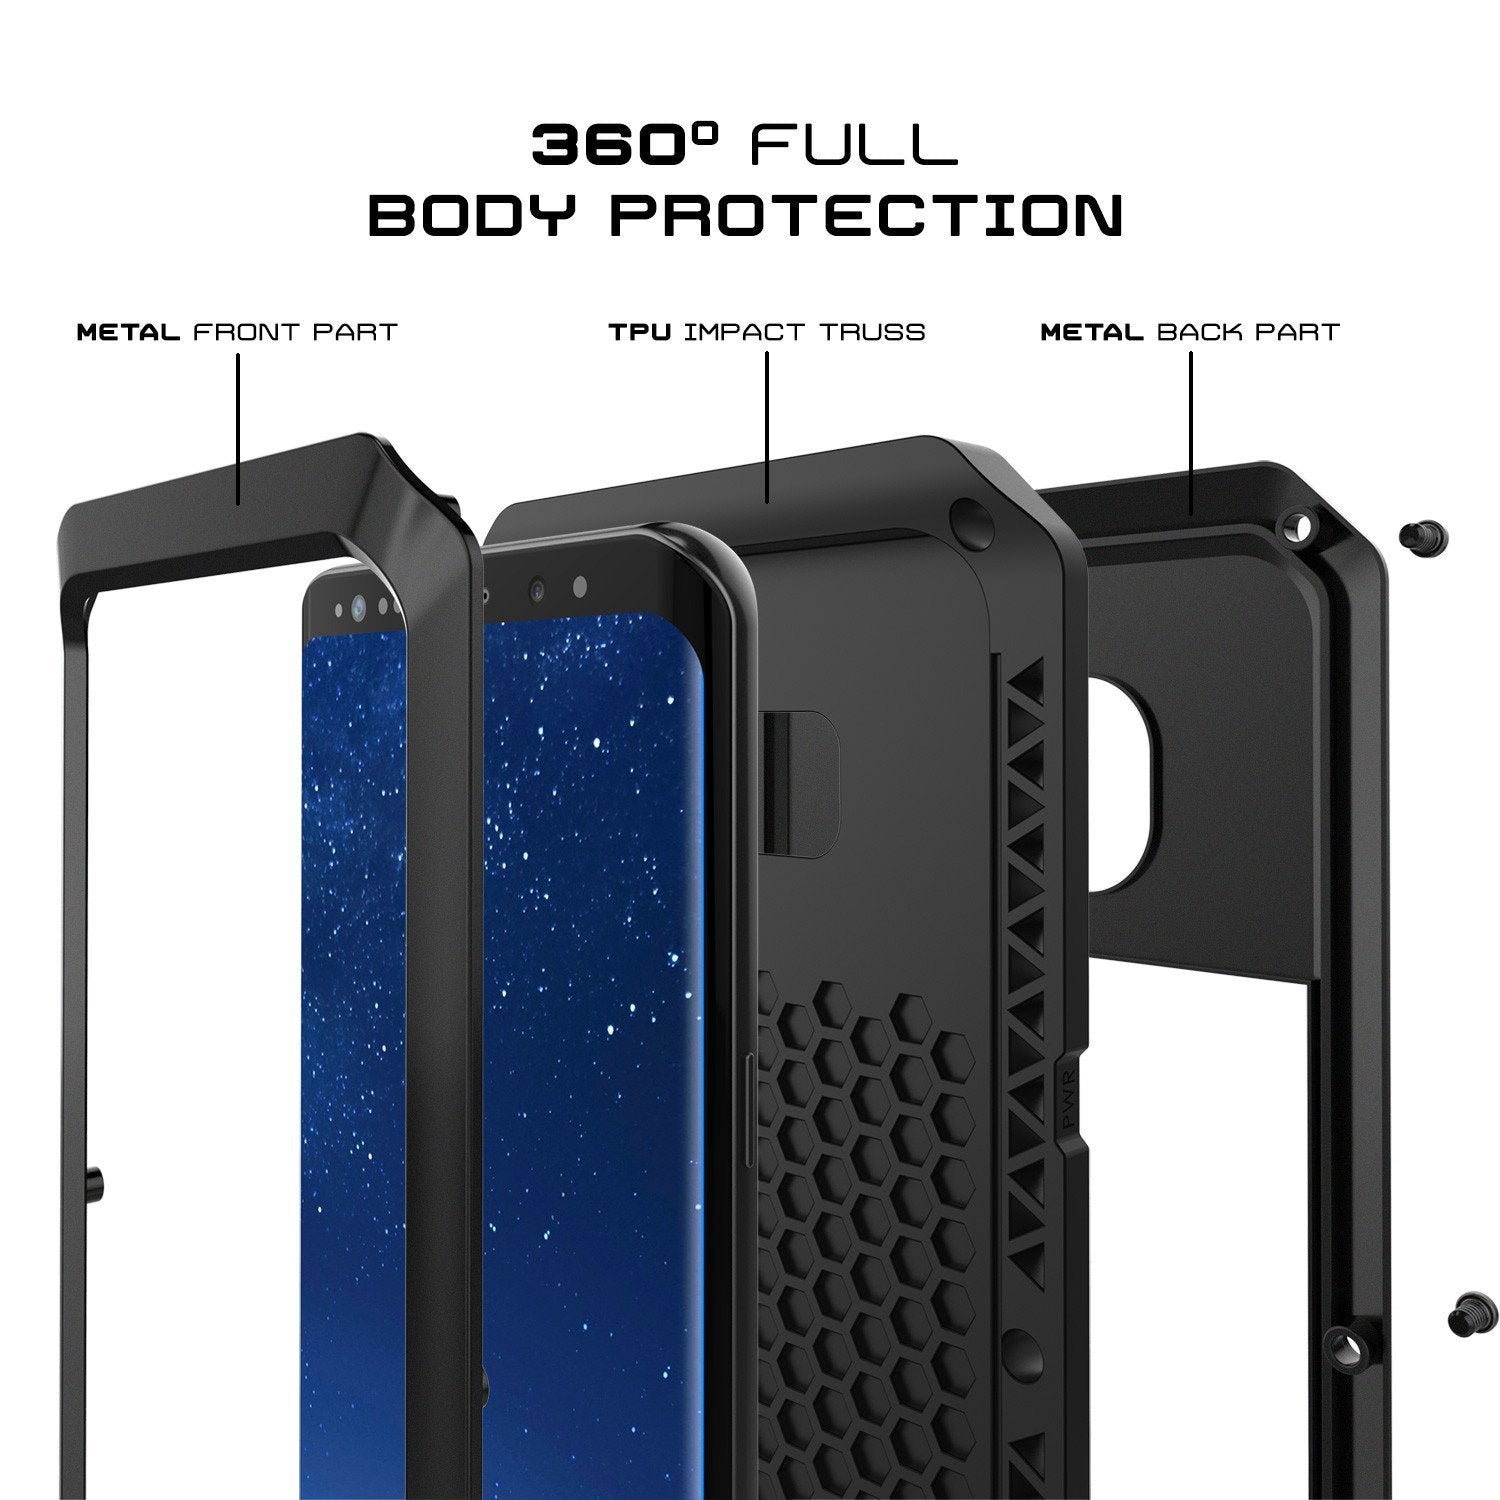 Galaxy Note 8 Case, PUNKcase Metallic Black Shockproof  Slim Metal Armor Case